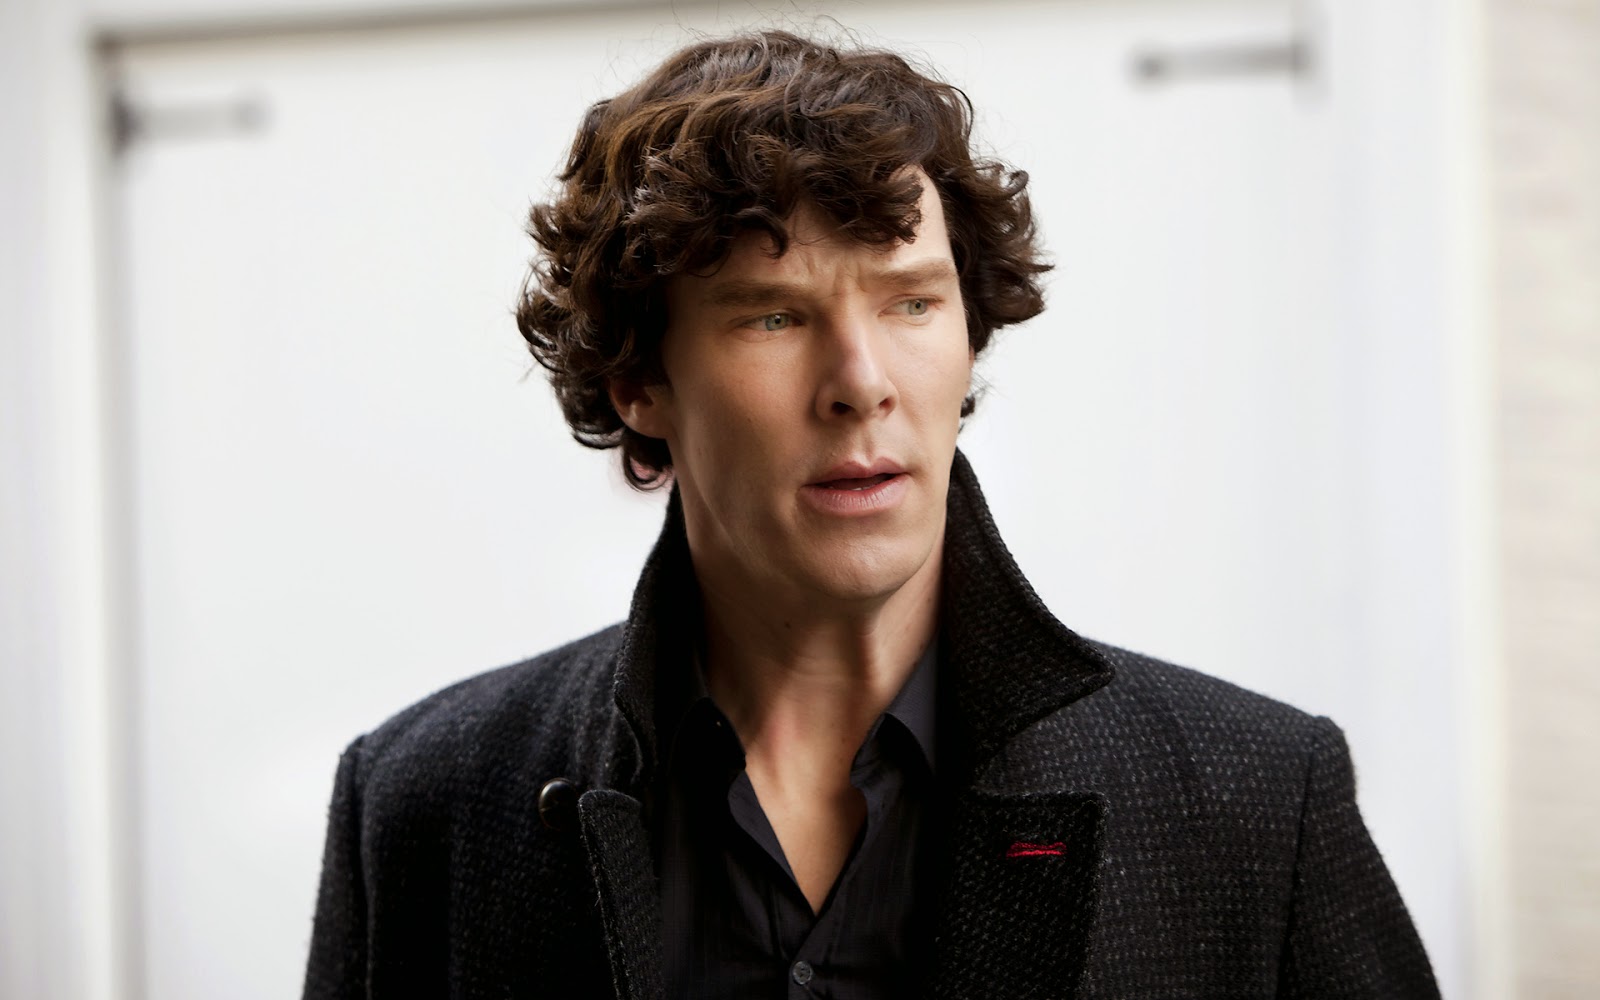 Benedict+Cumberbatch+as+Sherlock+Holmes+in+BBC+Sherlock+Season+2+Episode+1+A+Scandal+in+Belgravia.jpg